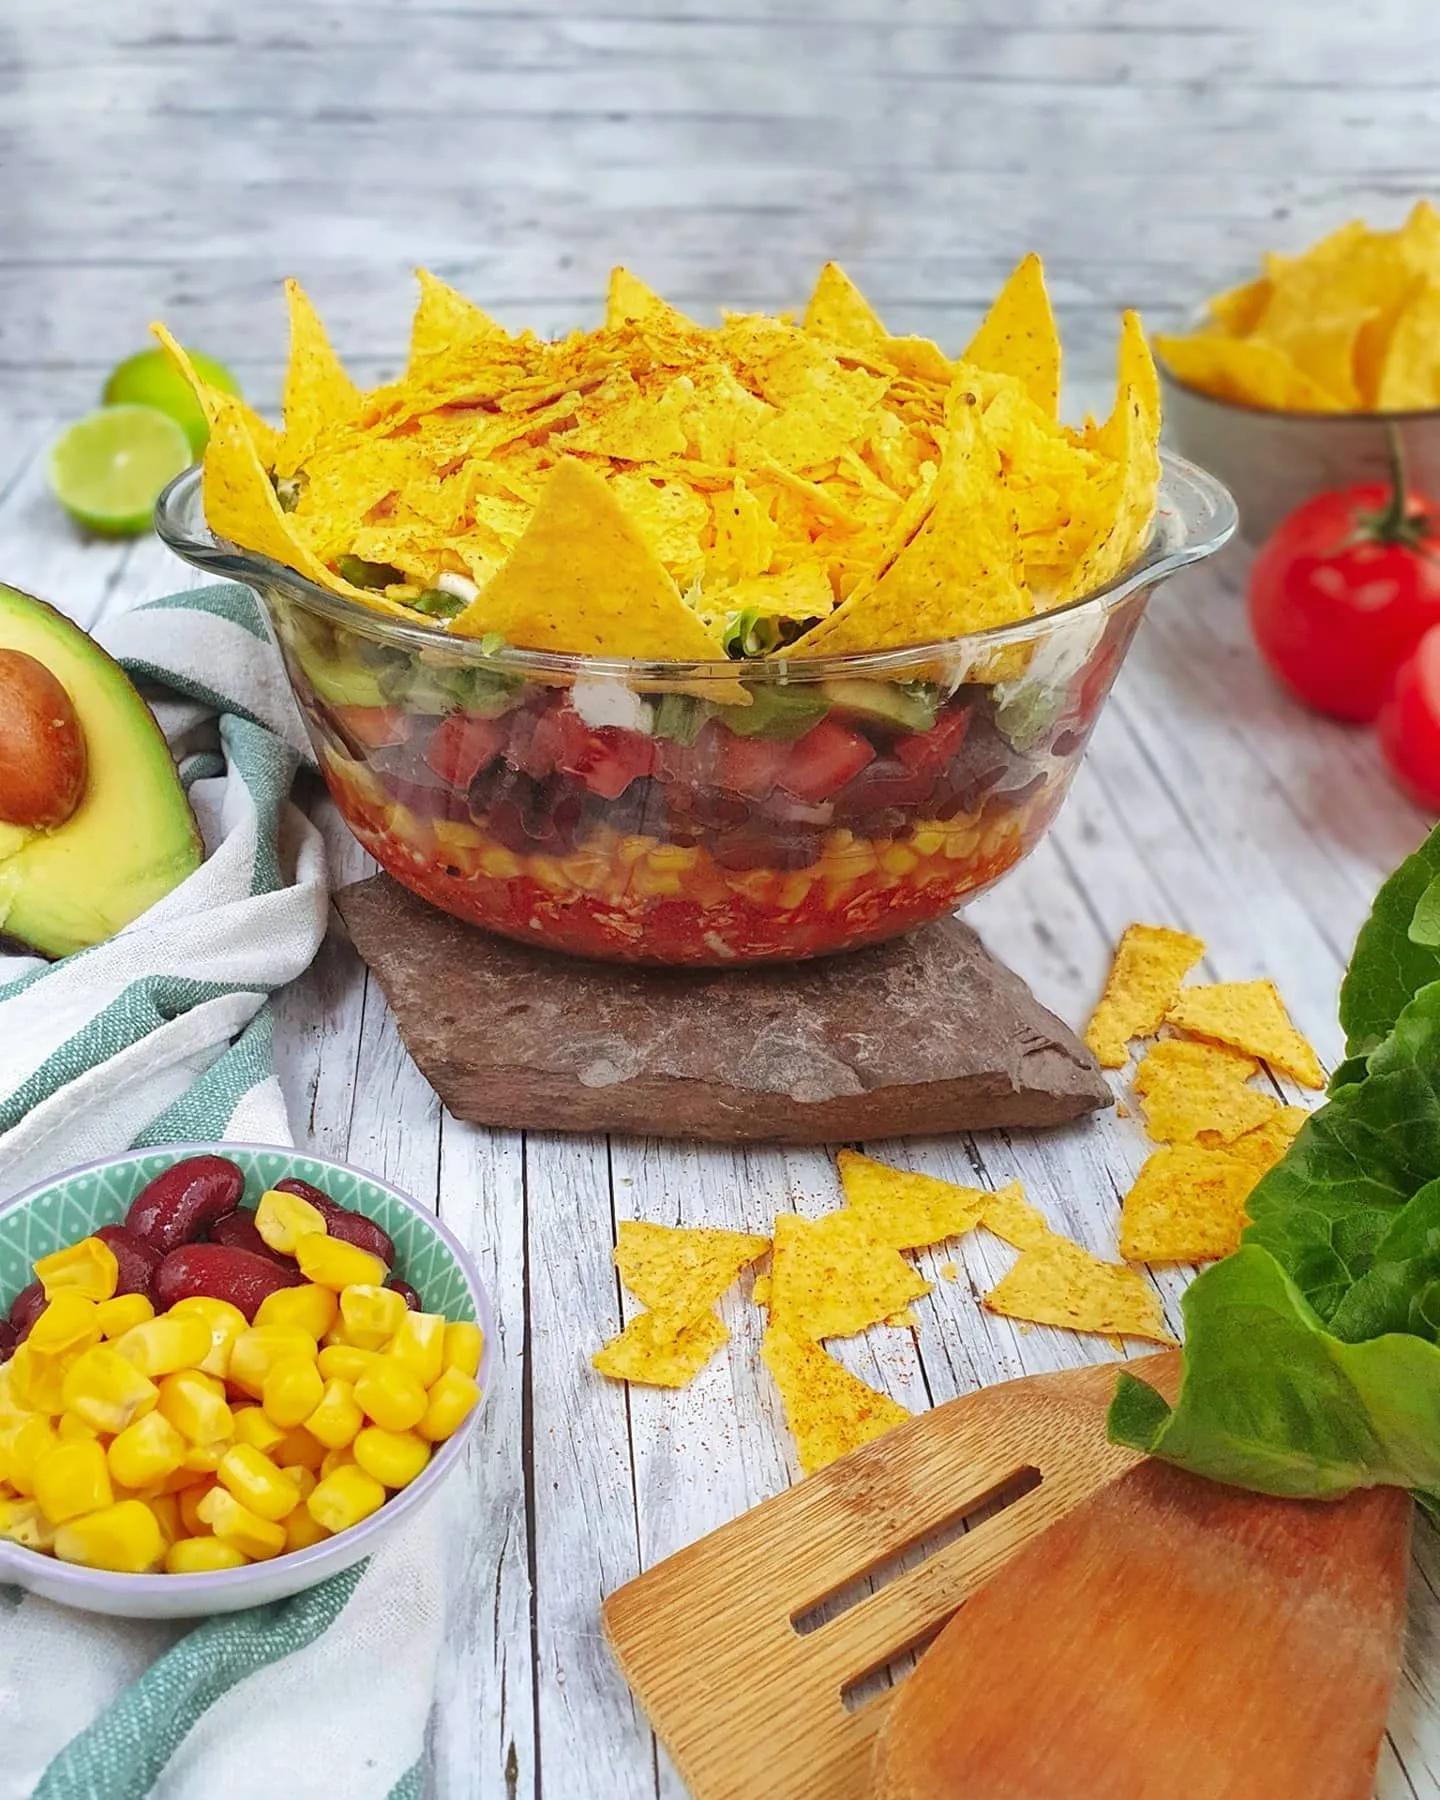 Mexikanischer Nacho Salat 🥗🥑 ⠀⠀⠀⠀⠀⠀⠀⠀⠀⠀⠀ ⠀⠀⠀⠀⠀⠀⠀⠀⠀⠀⠀⠀⠀⠀⠀⠀⠀⠀⠀⠀⠀⠀ Heute ...